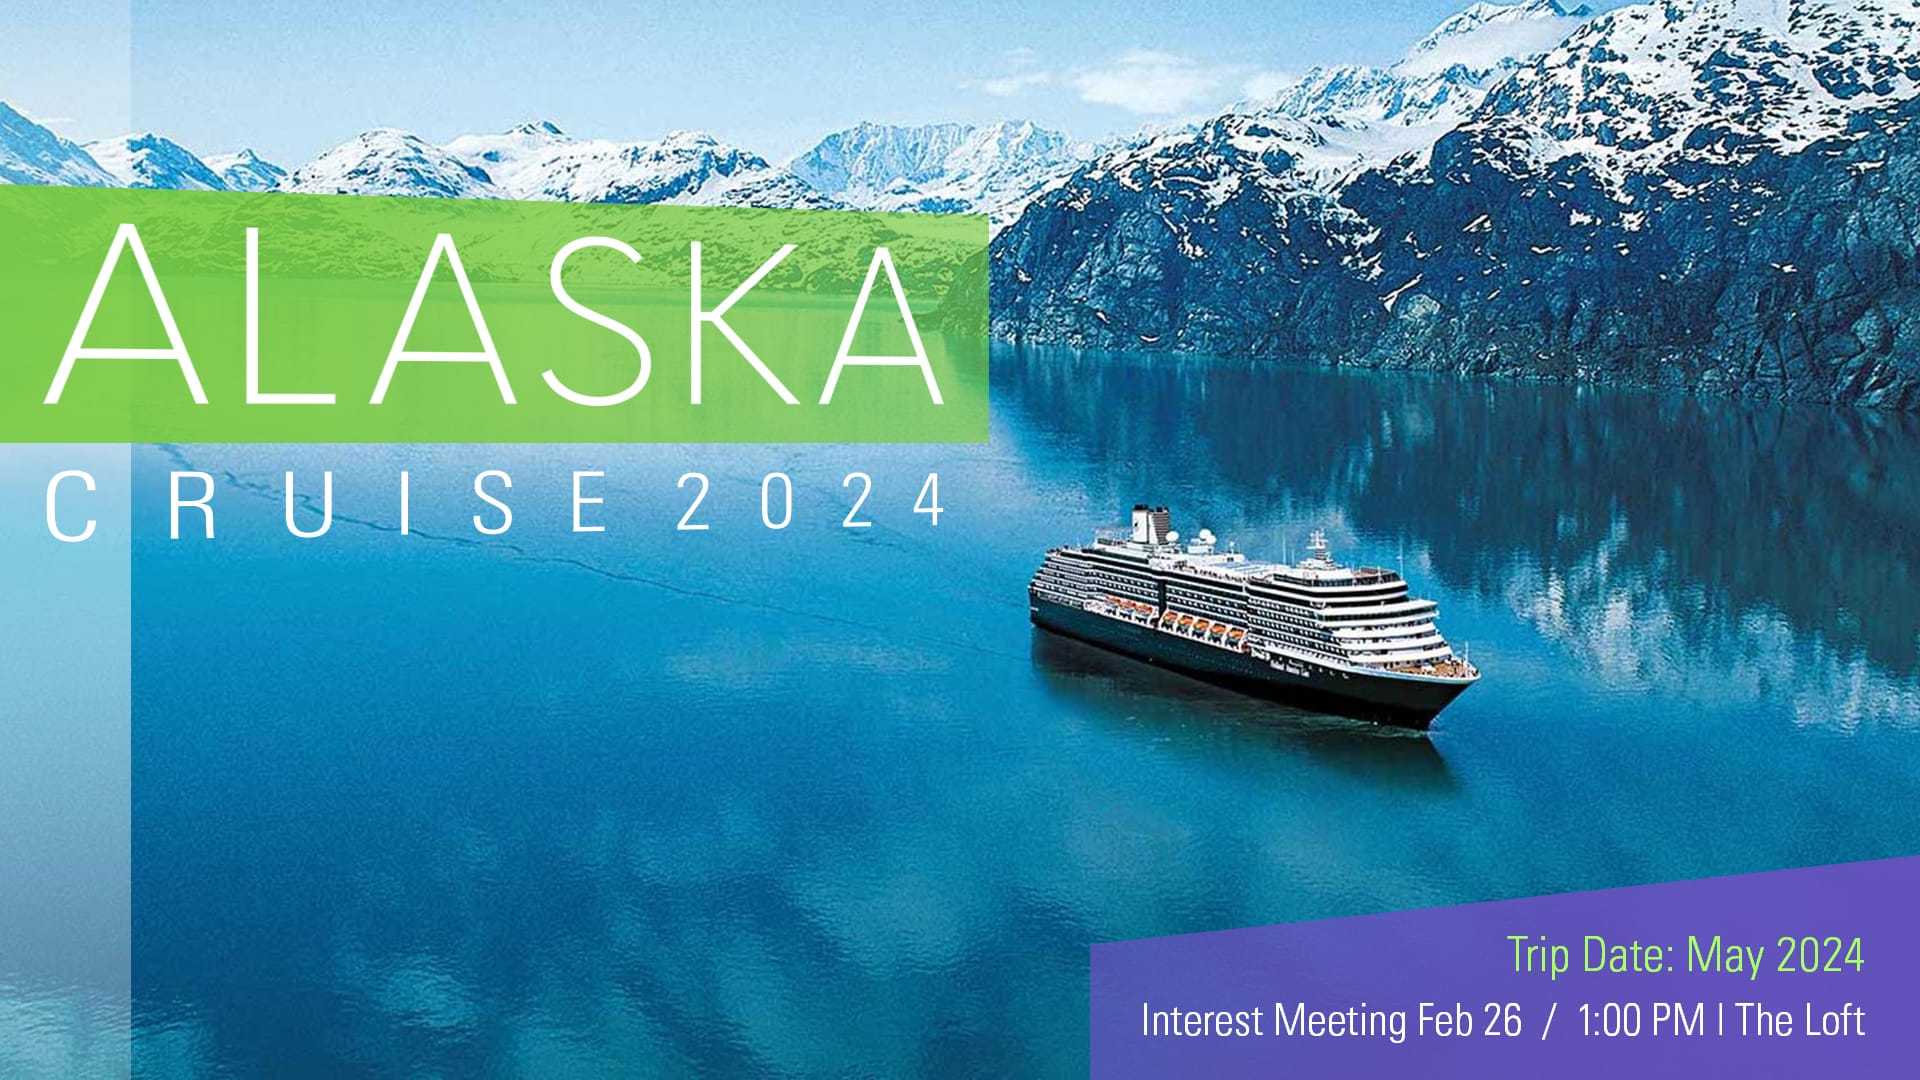 Alaska Cruise 2024 Interest Meeting